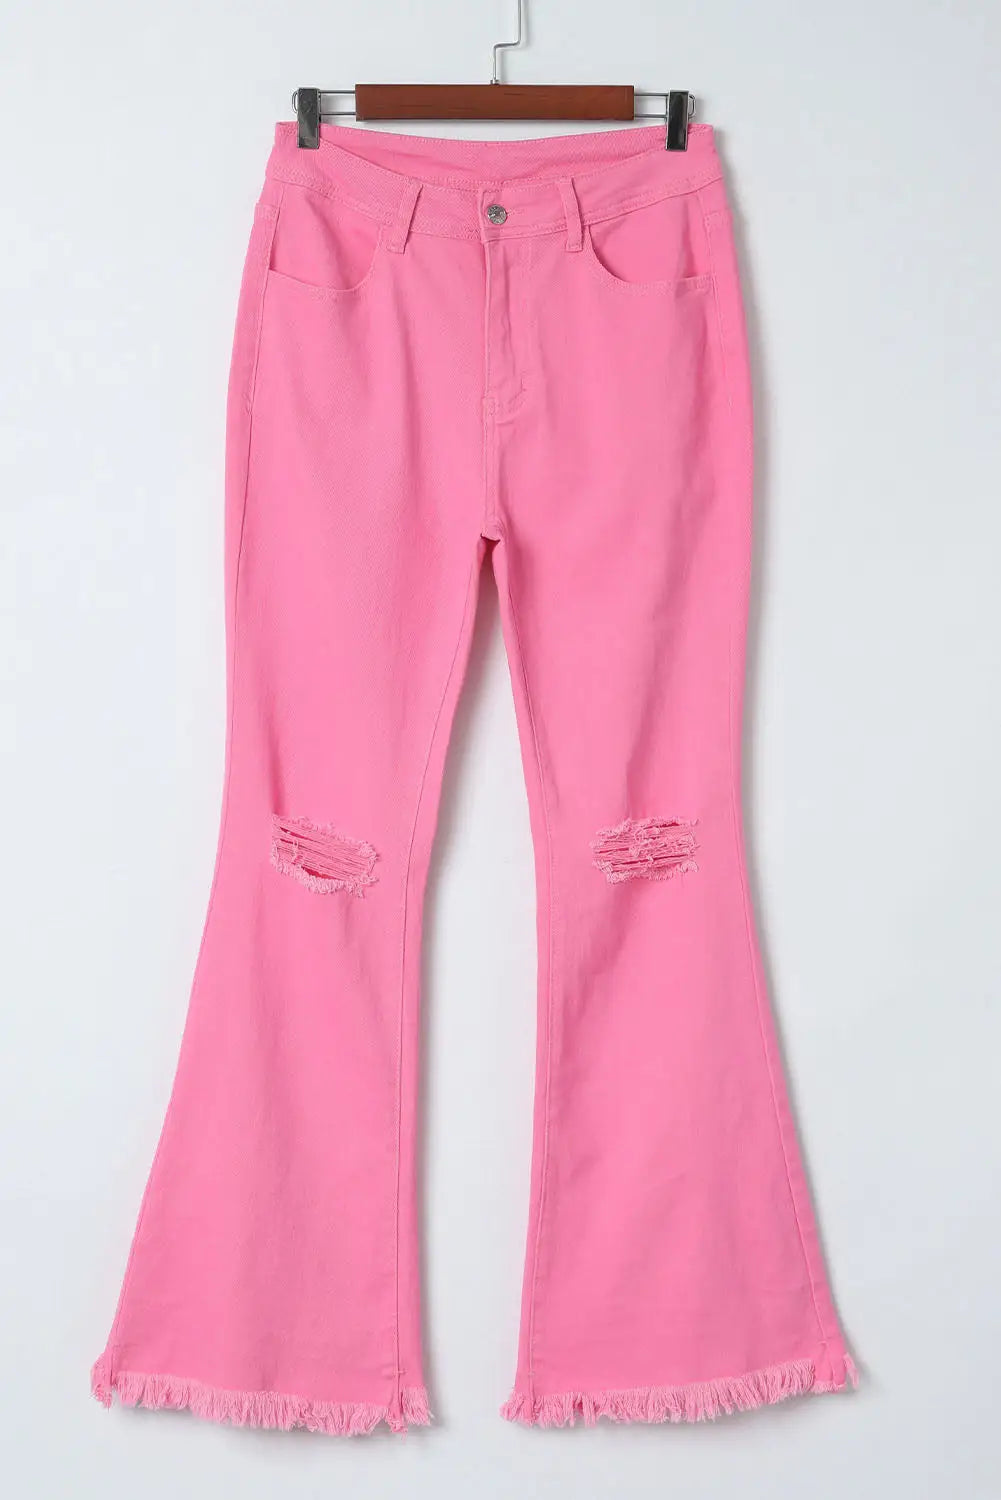 Pink vintage high waist flare leg ripped raw hem jeans